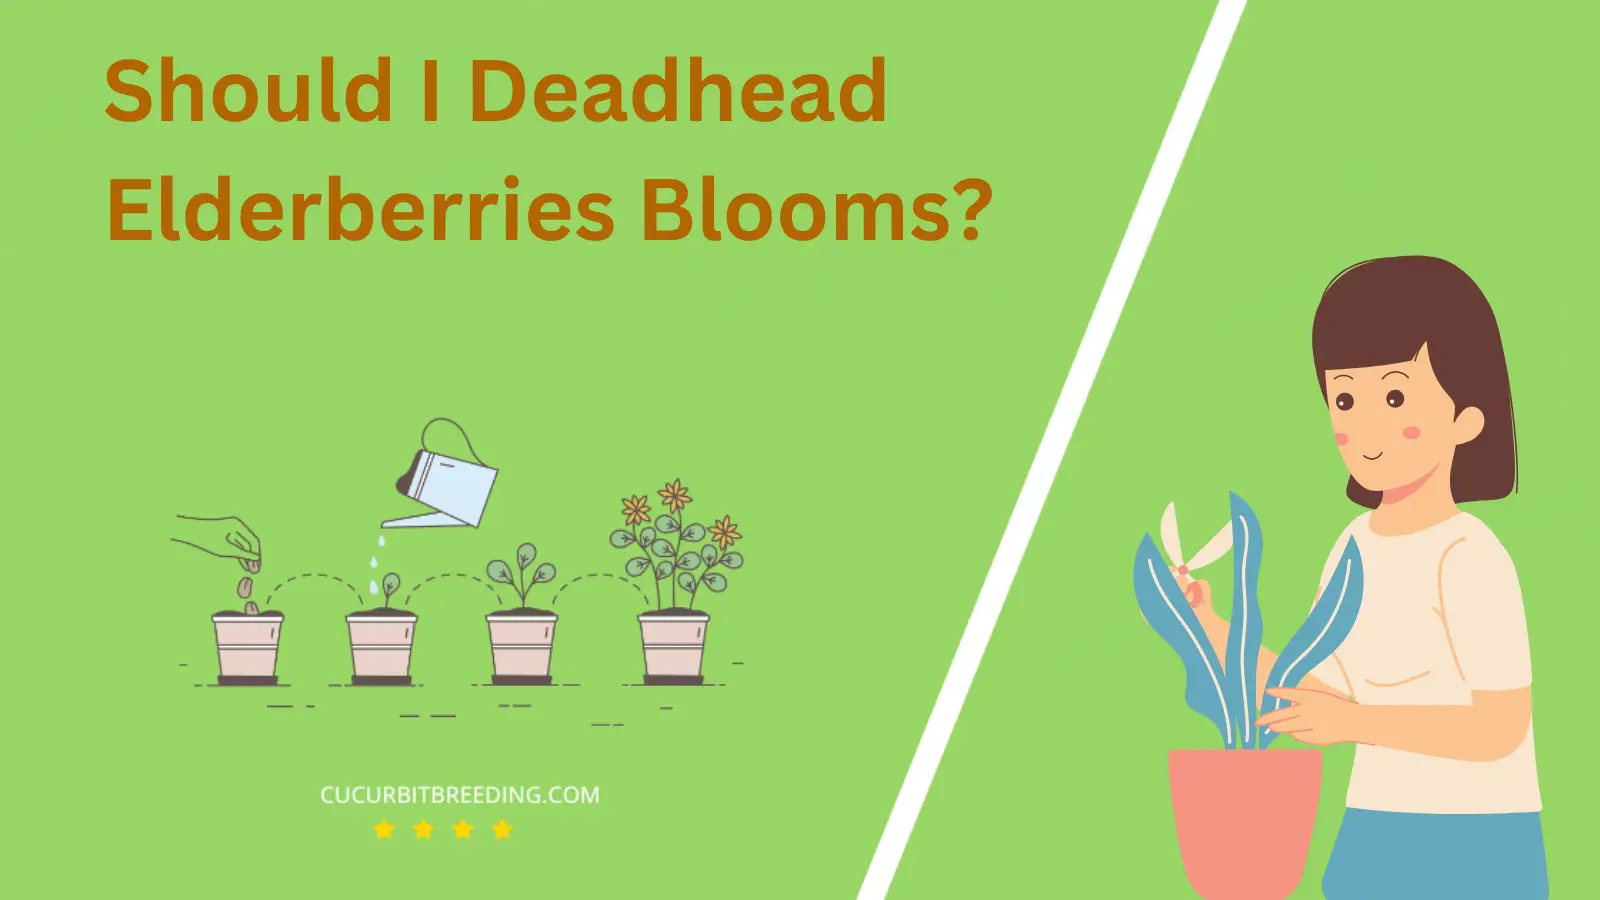 Should I Deadhead Elderberries Blooms?